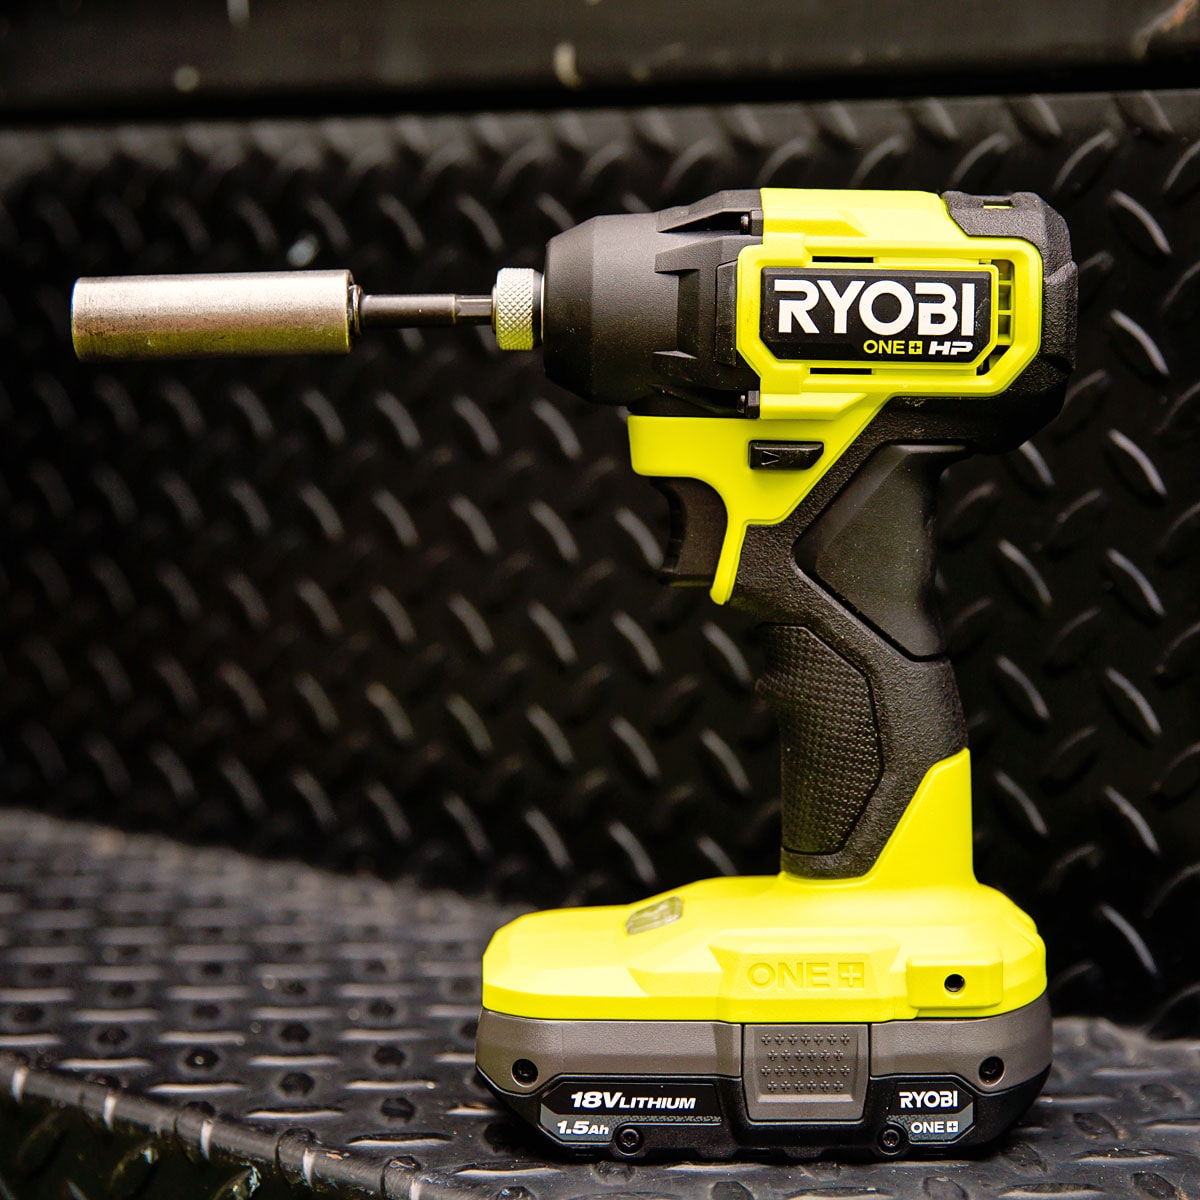 8 Ryobi Power Tools Every Homeowner Needs